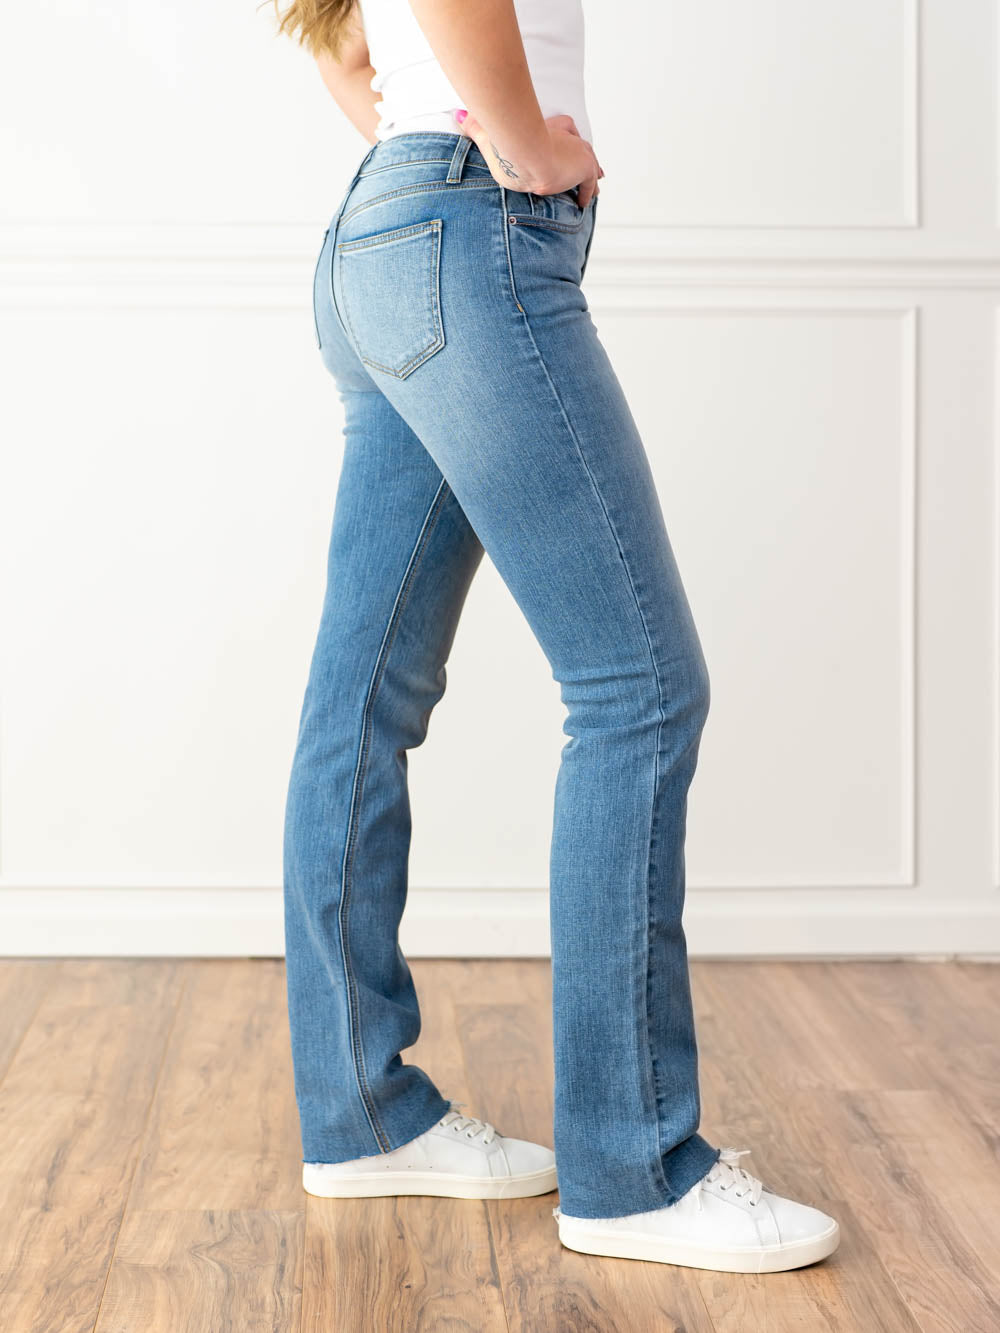 Chanel Straight Leg Jean for Tall Women - 34 and 36 Inseam Lengths –  Amalli Talli